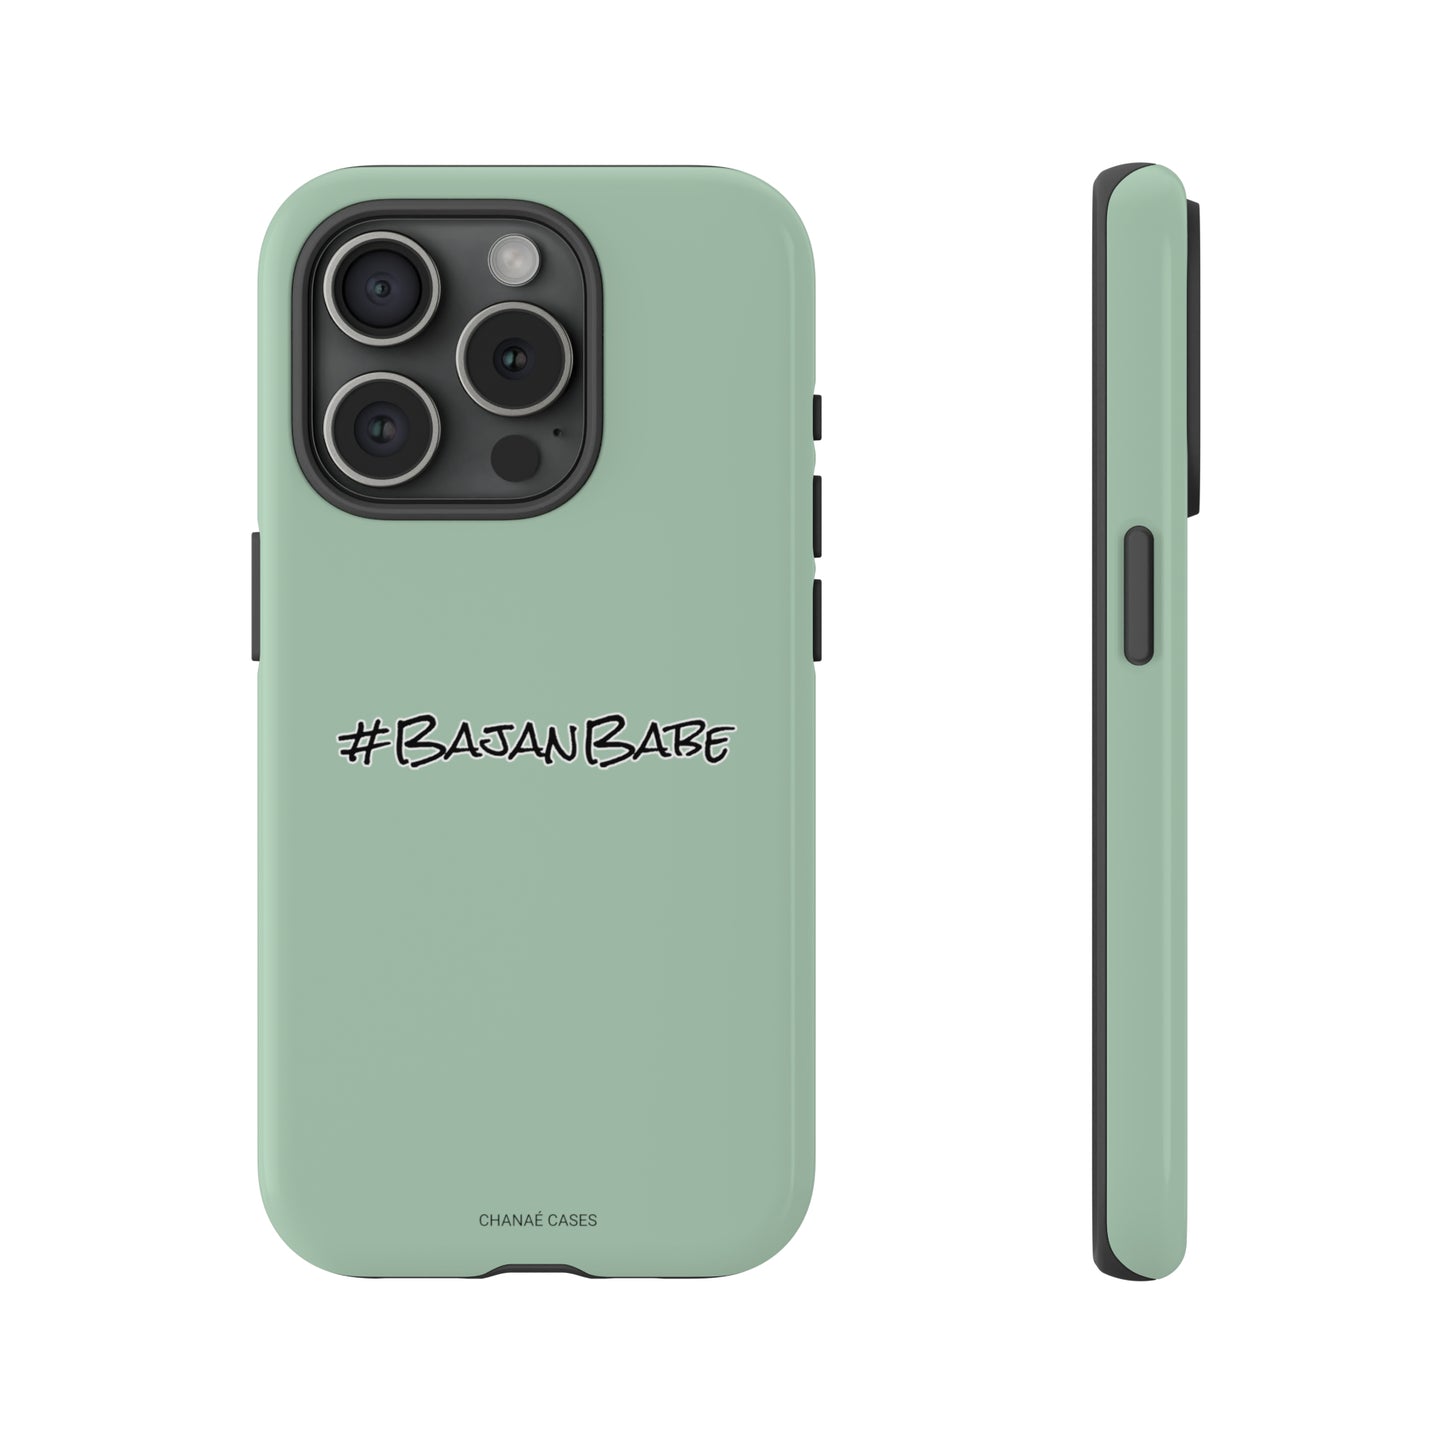 #BajanBabe iPhone "Tough" Case (Mint Green)